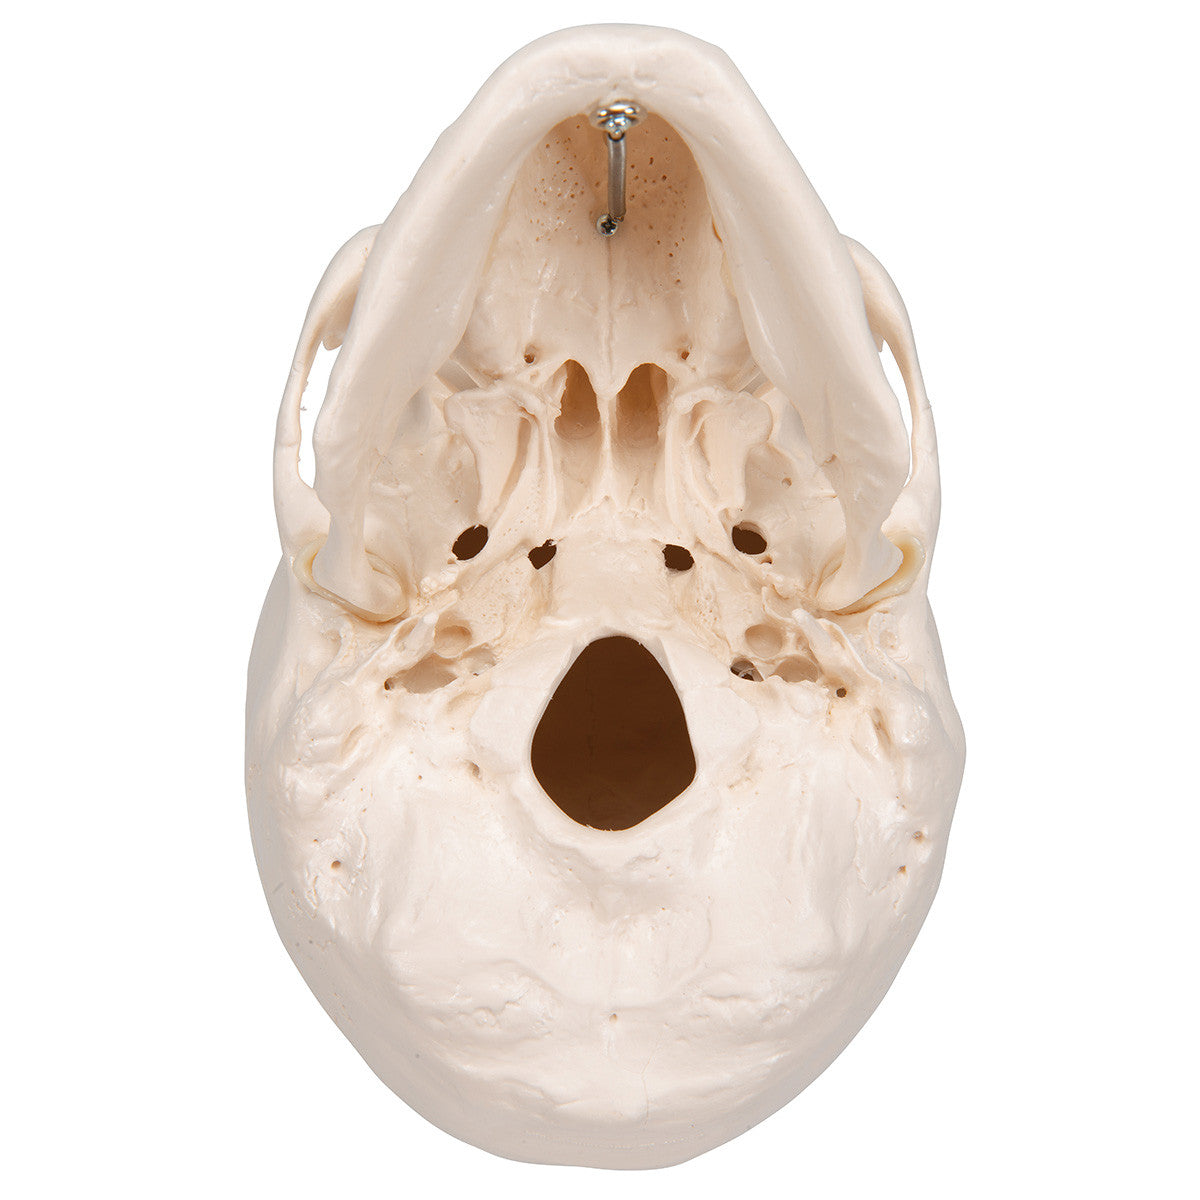 Standard Human Skull, natural cast, adult - inferior view